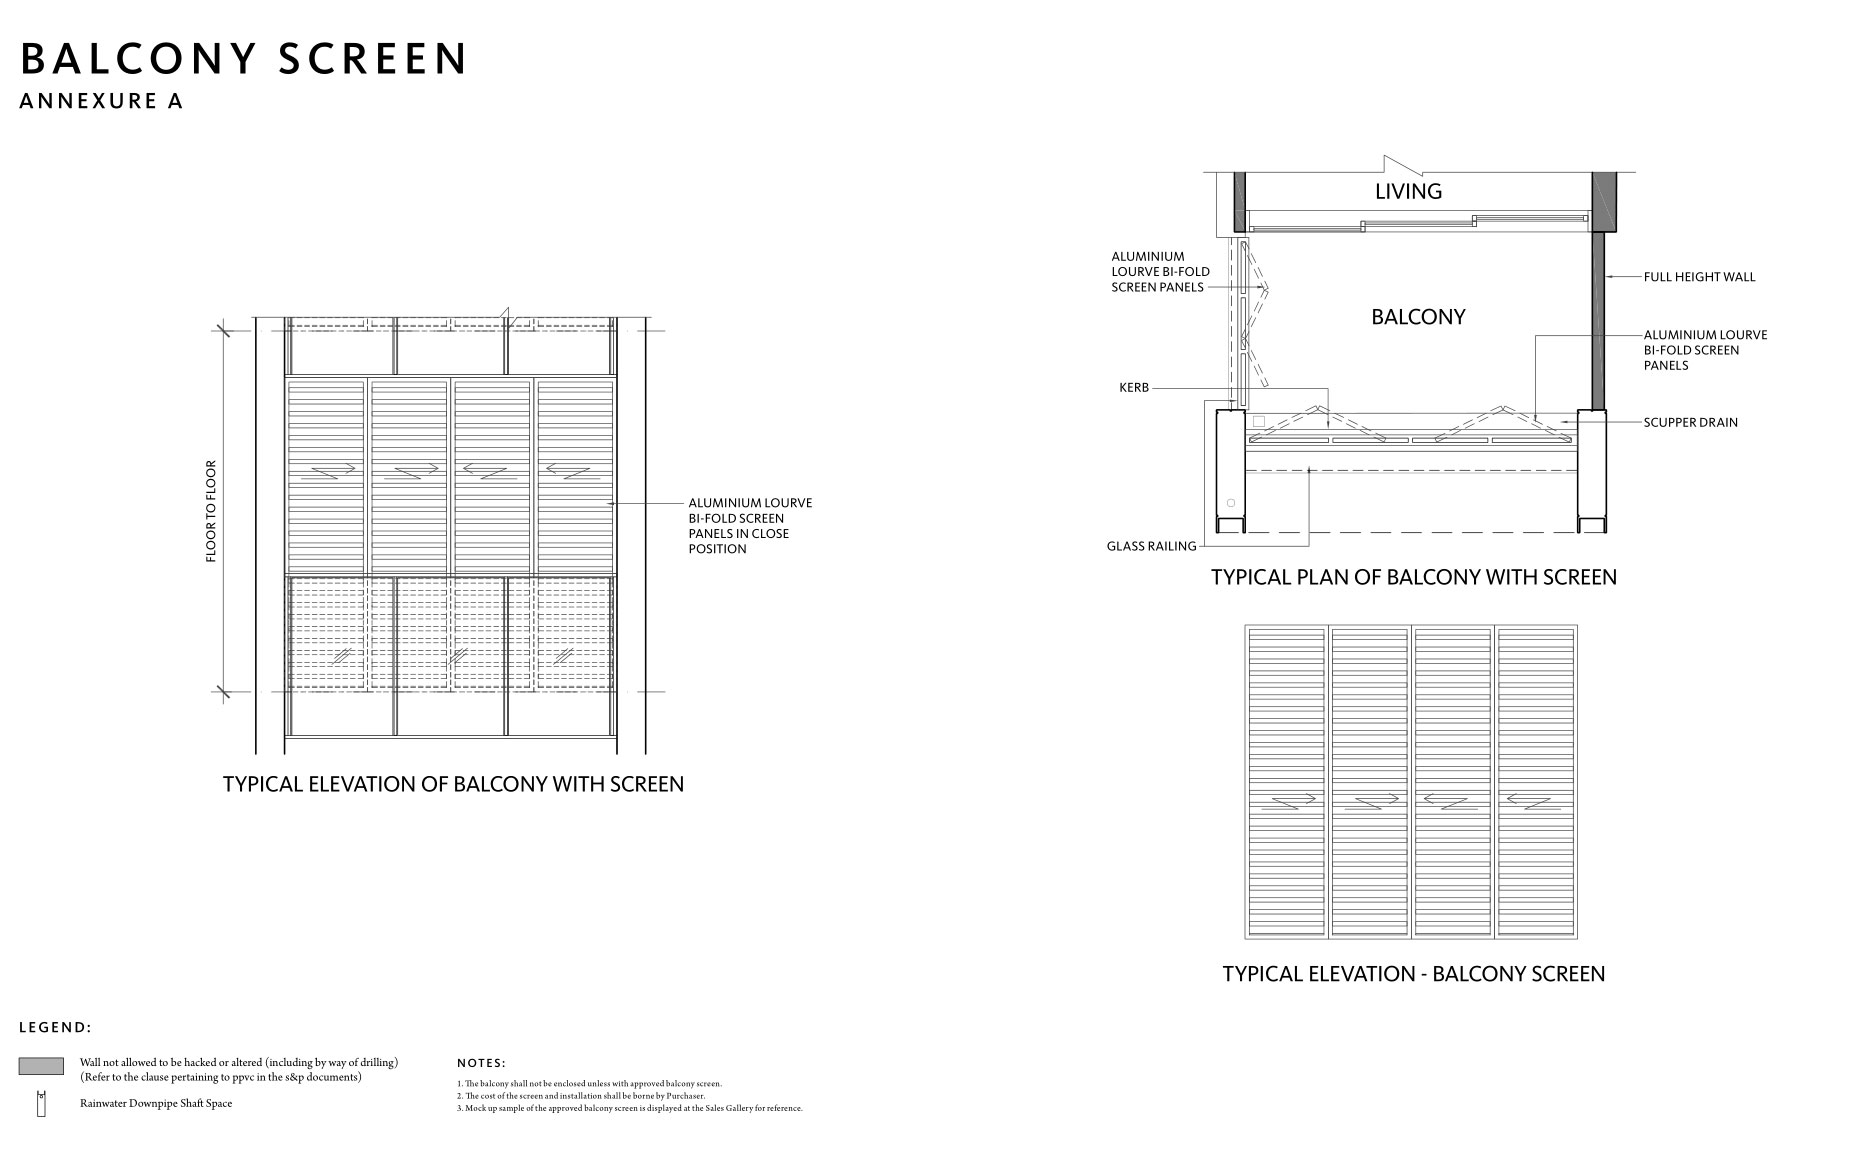 Balcony-Screen-Annex